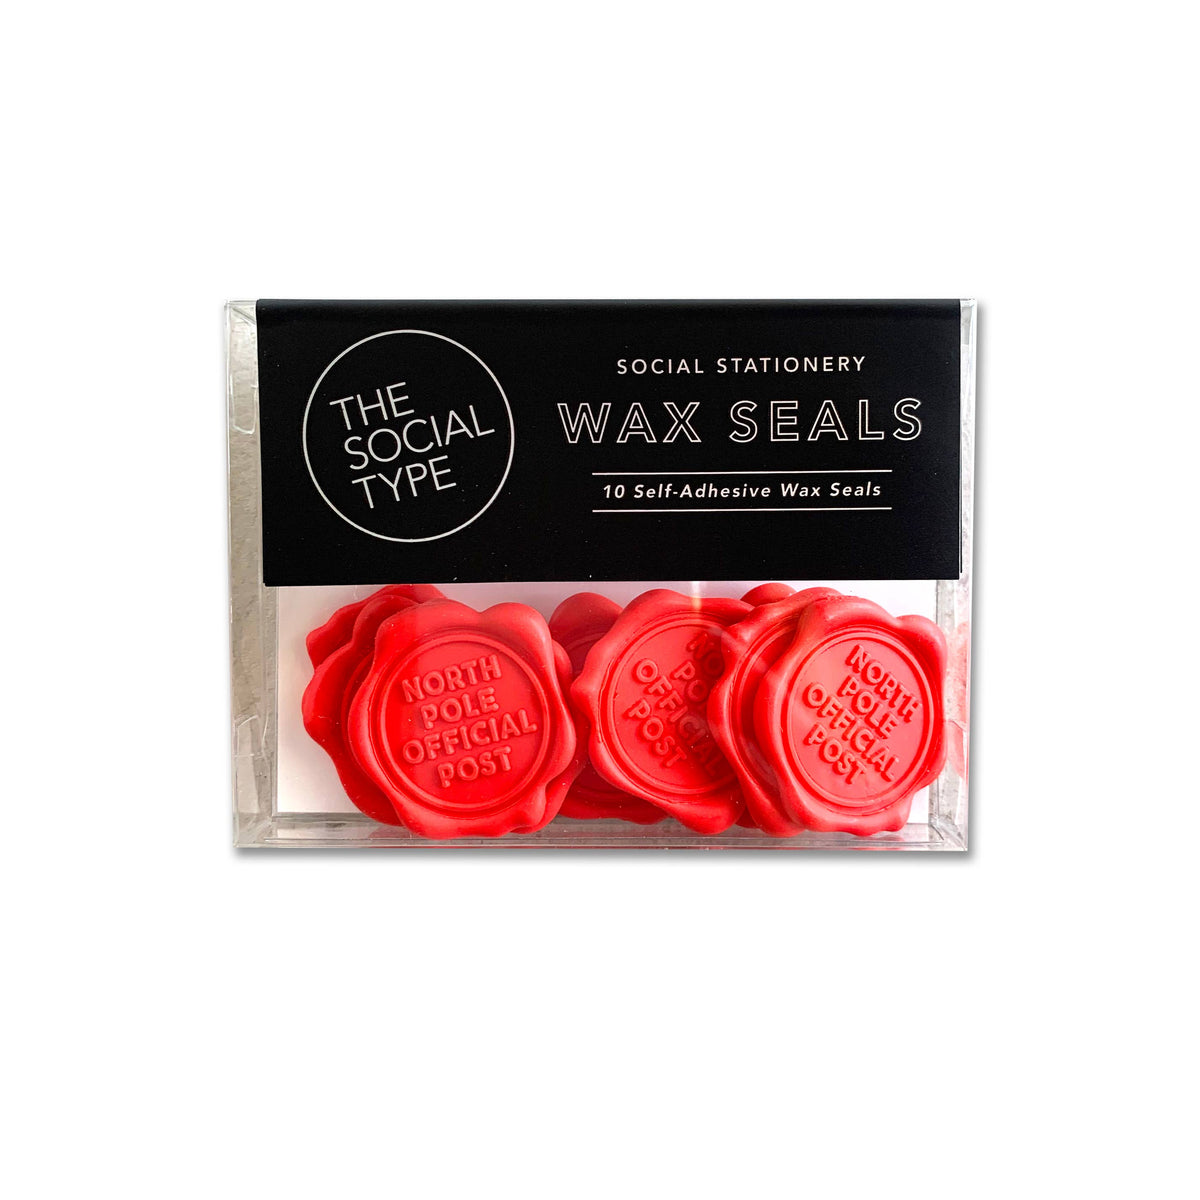 North Pole Official Post Wax Seals